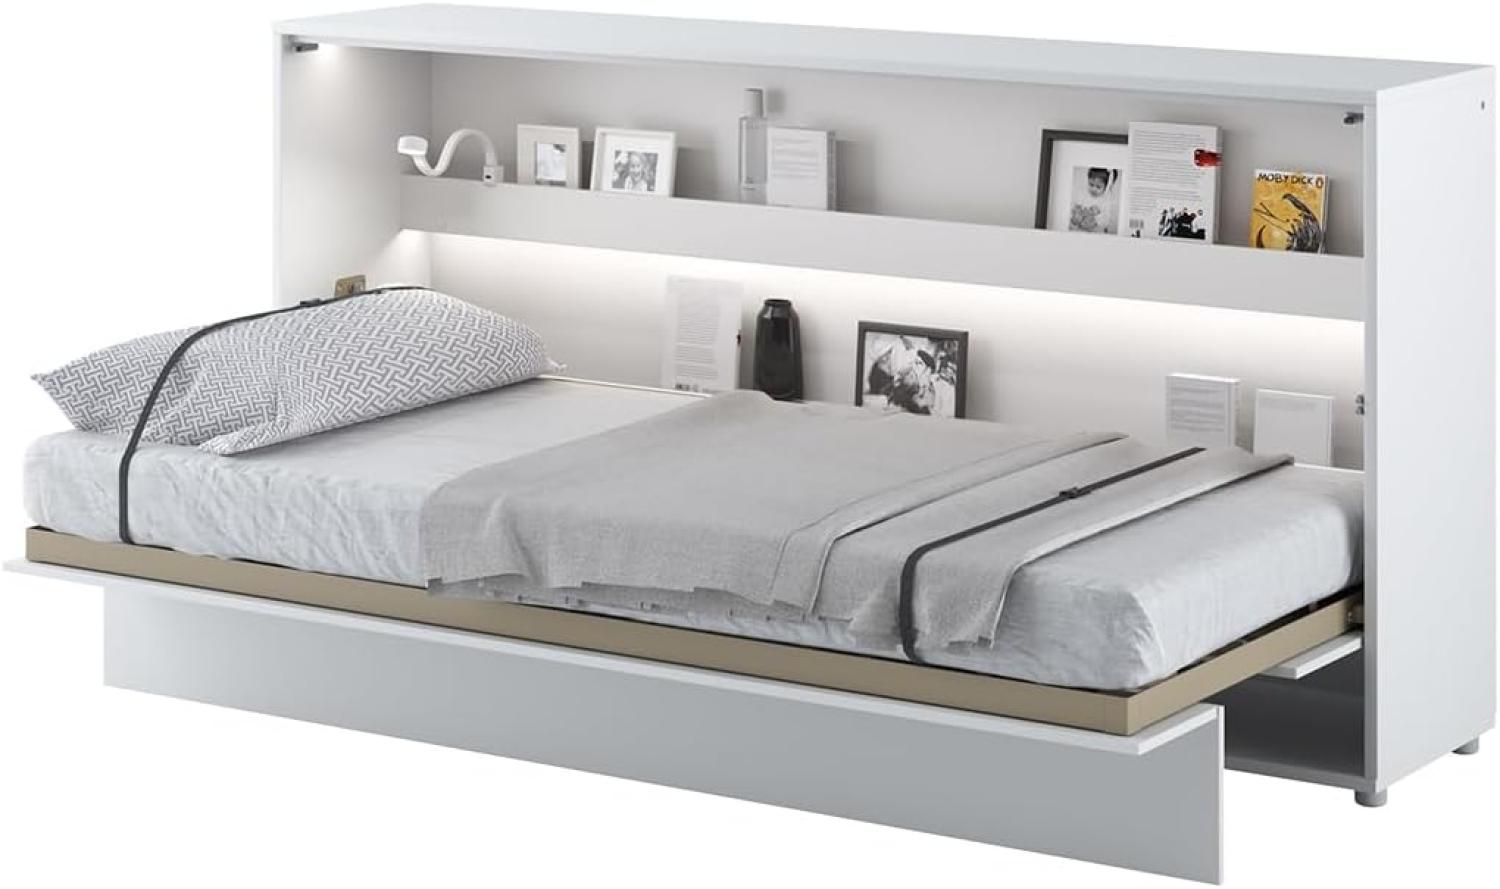 MEBLINI Schrankbett Bed Concept - Wandbett mit Lattenrost - Klappbett mit Schrank - Wandklappbett - Murphy Bed - Bettschrank - BC-06 - 90x200cm Horizontal - Weiß Matt Bild 1